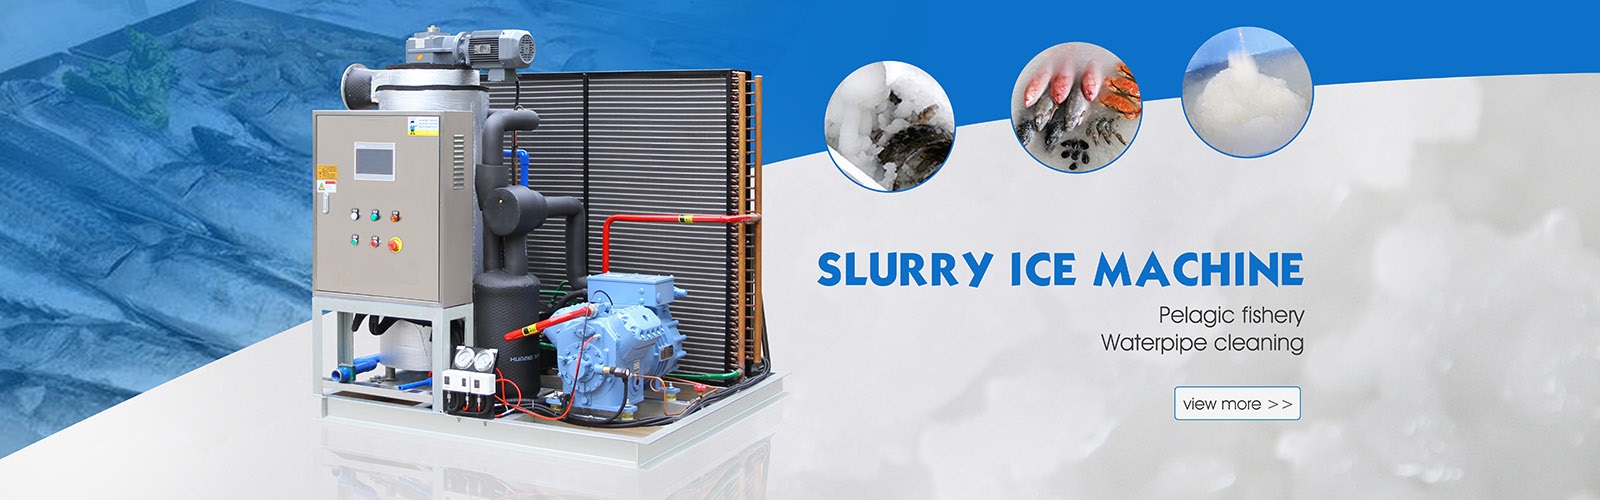 Slurry ice machine